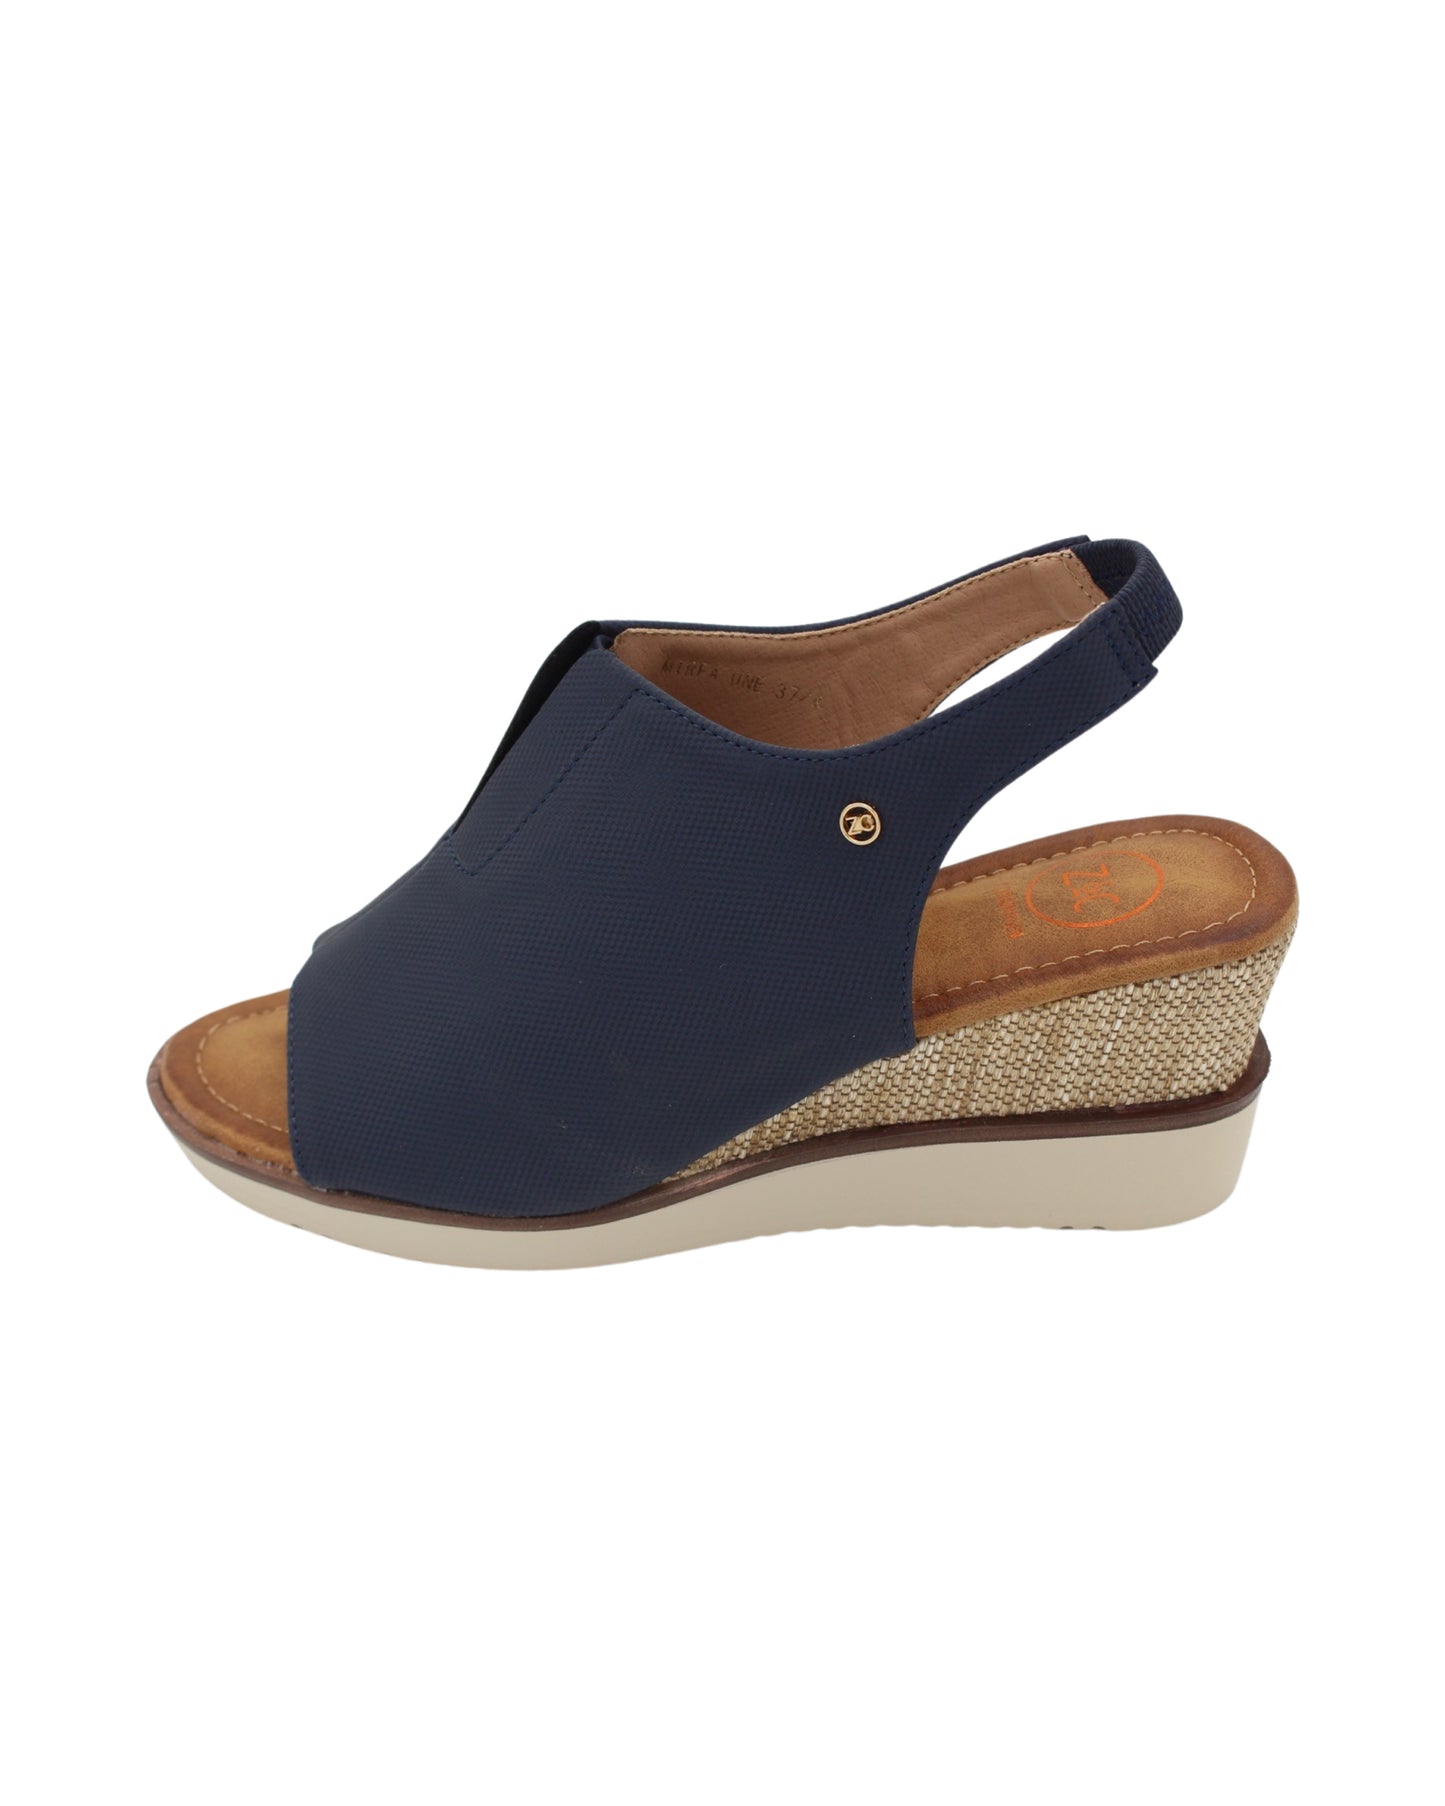 Zanni - Ladies Shoes Sandals Navy (2138)